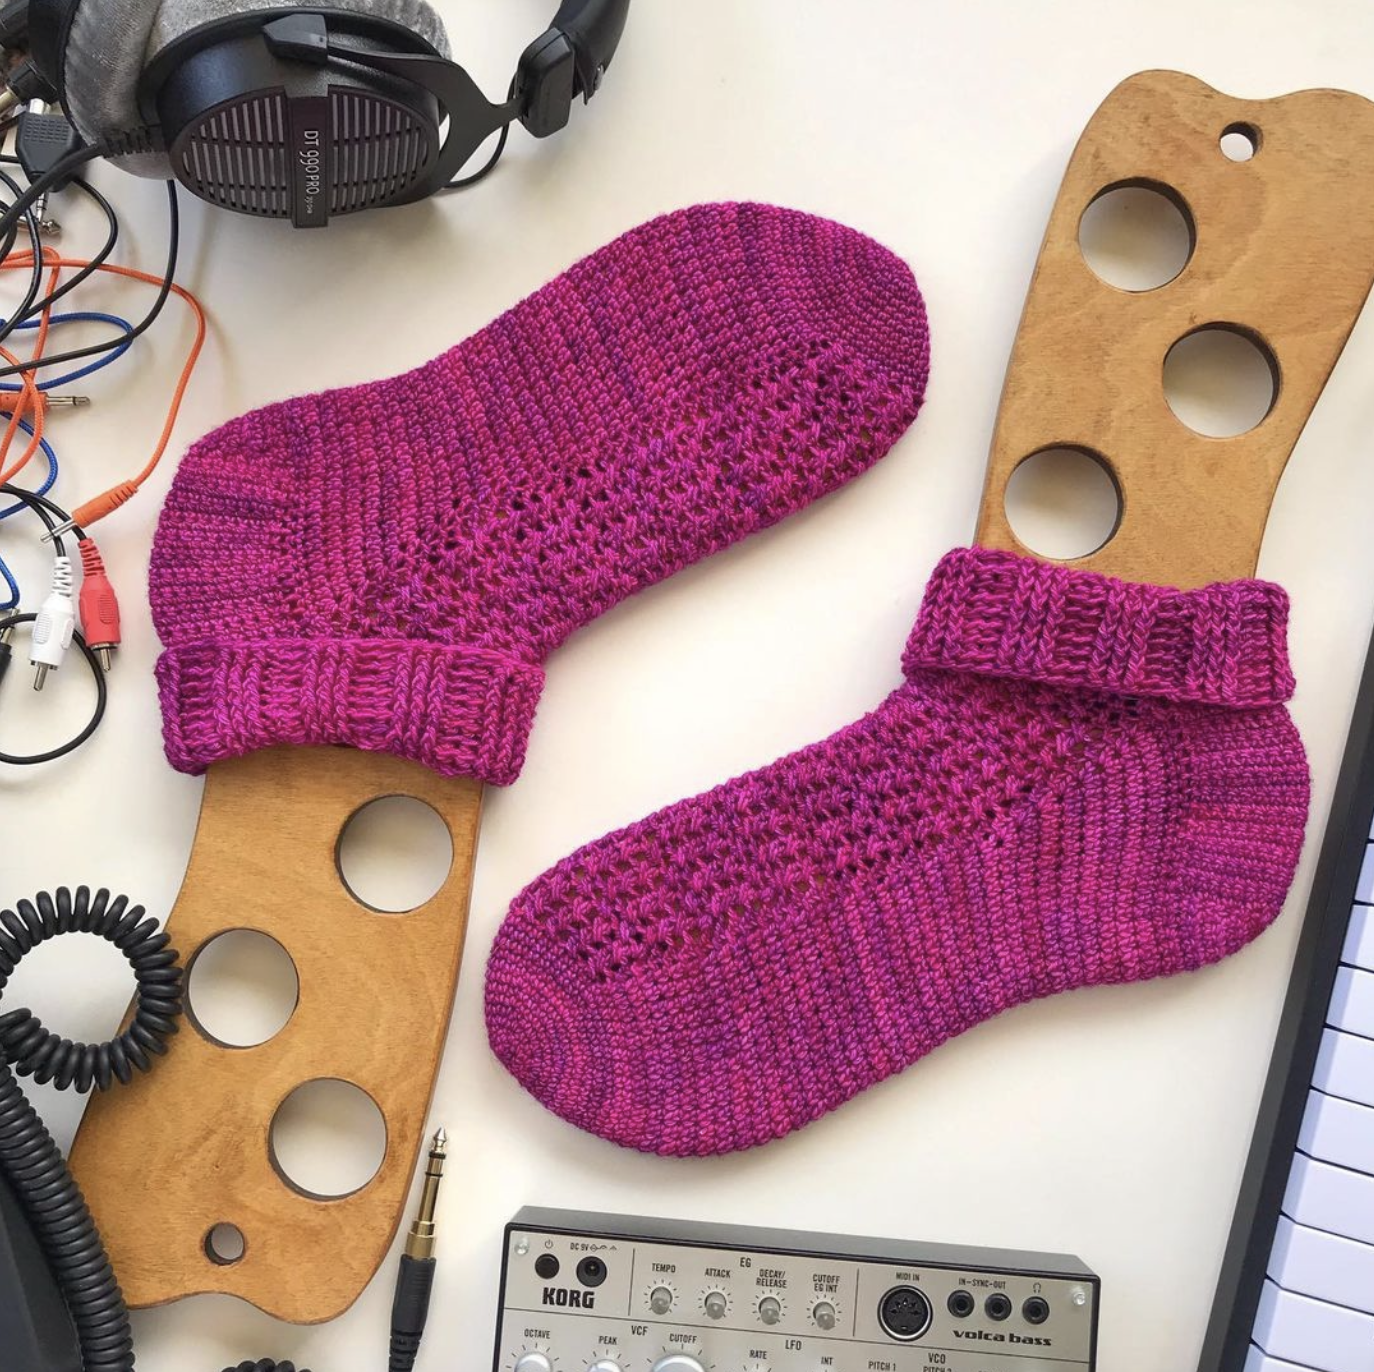 Crocheted Socks Workshop